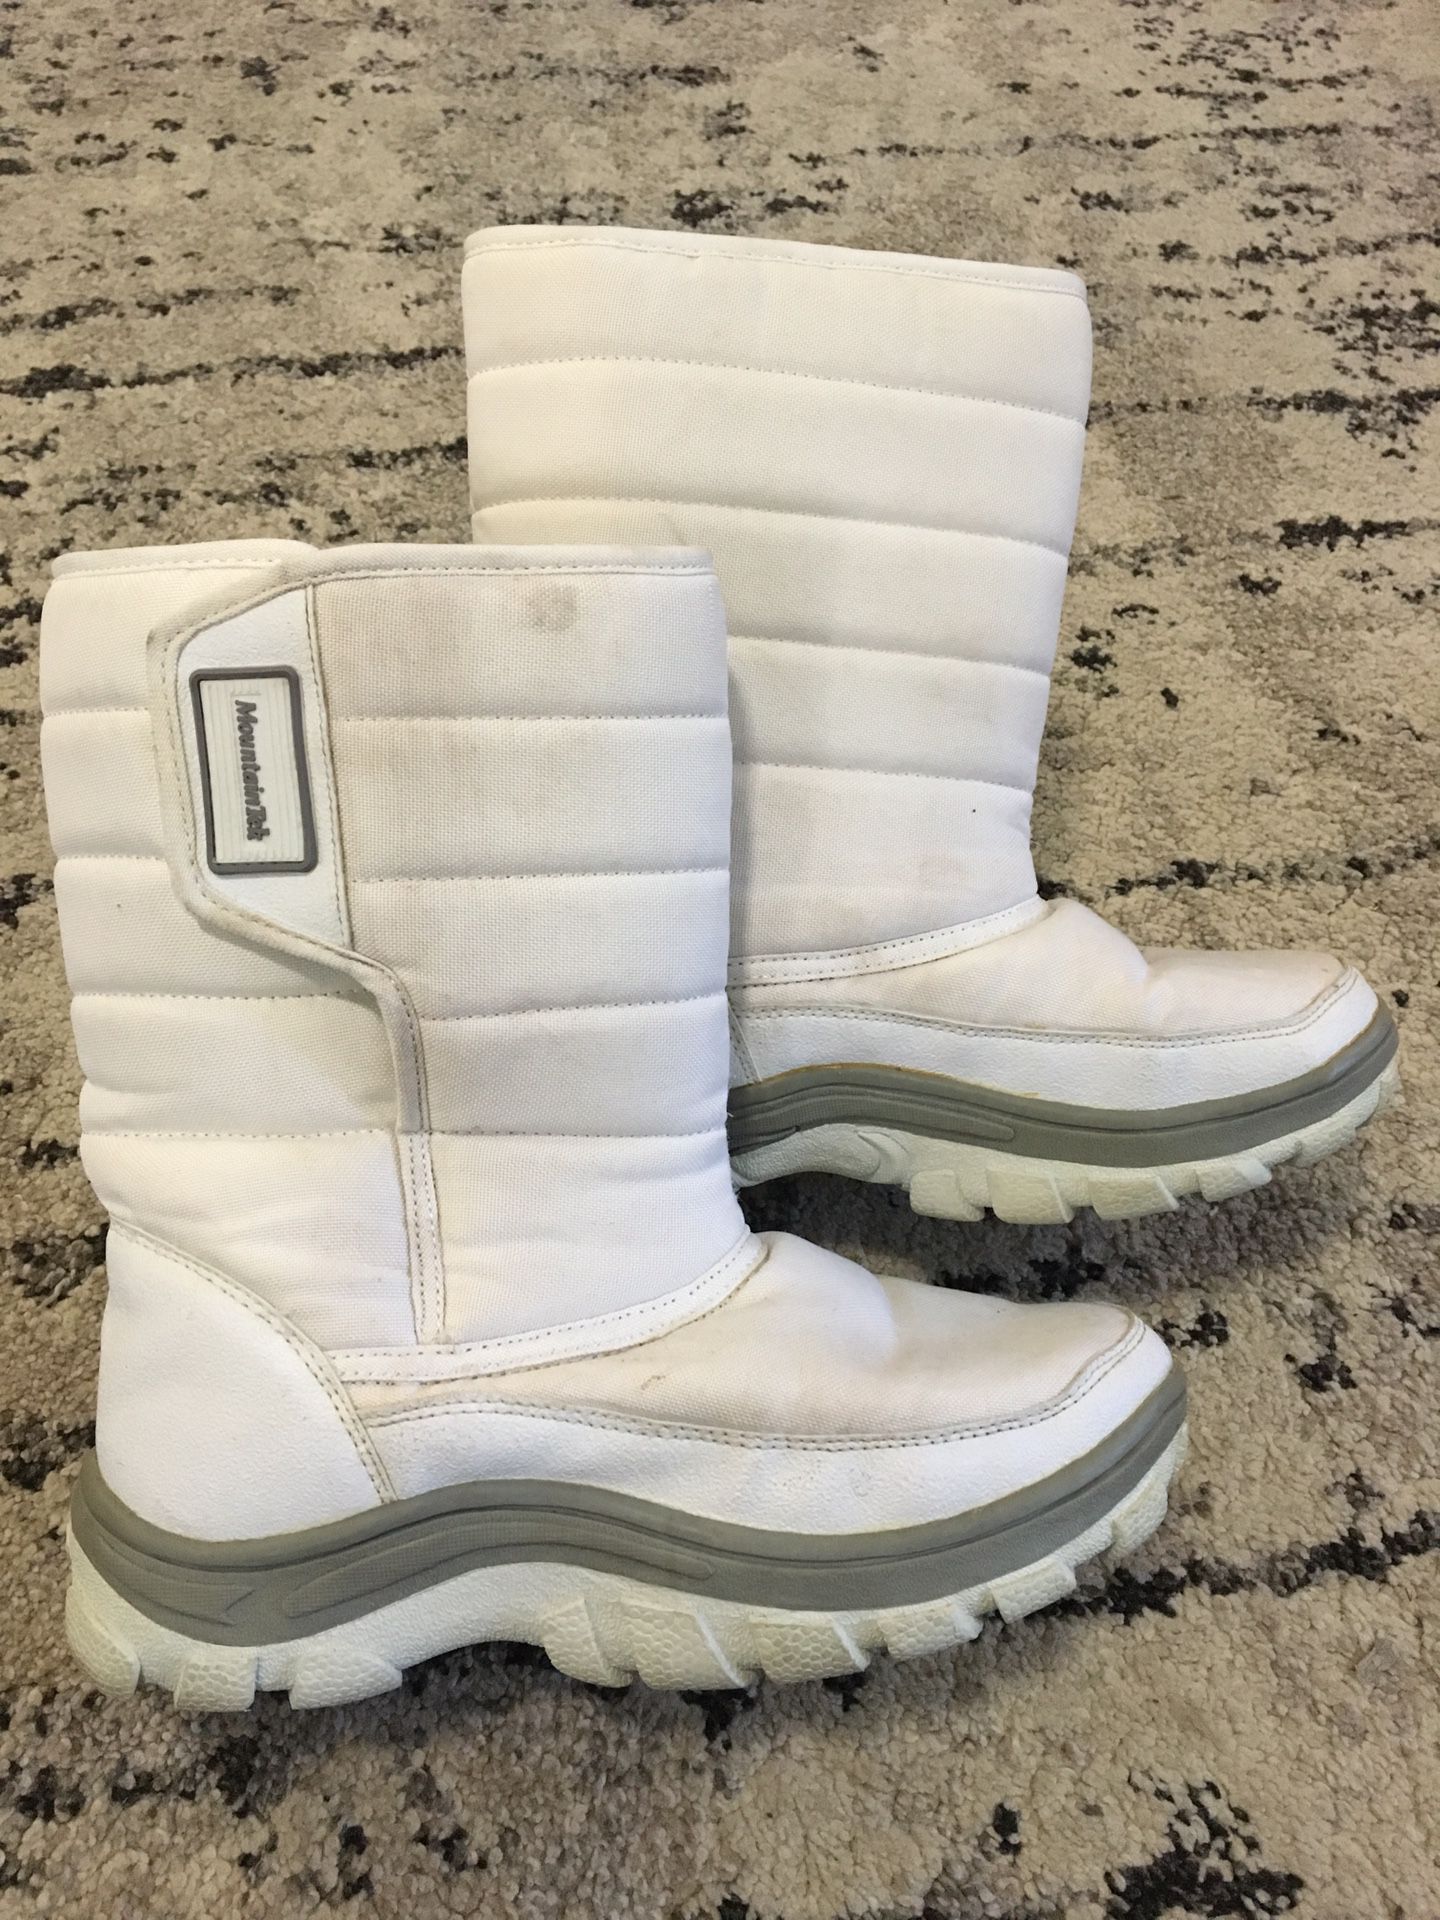 MountainTek women’s size 7 snow boots